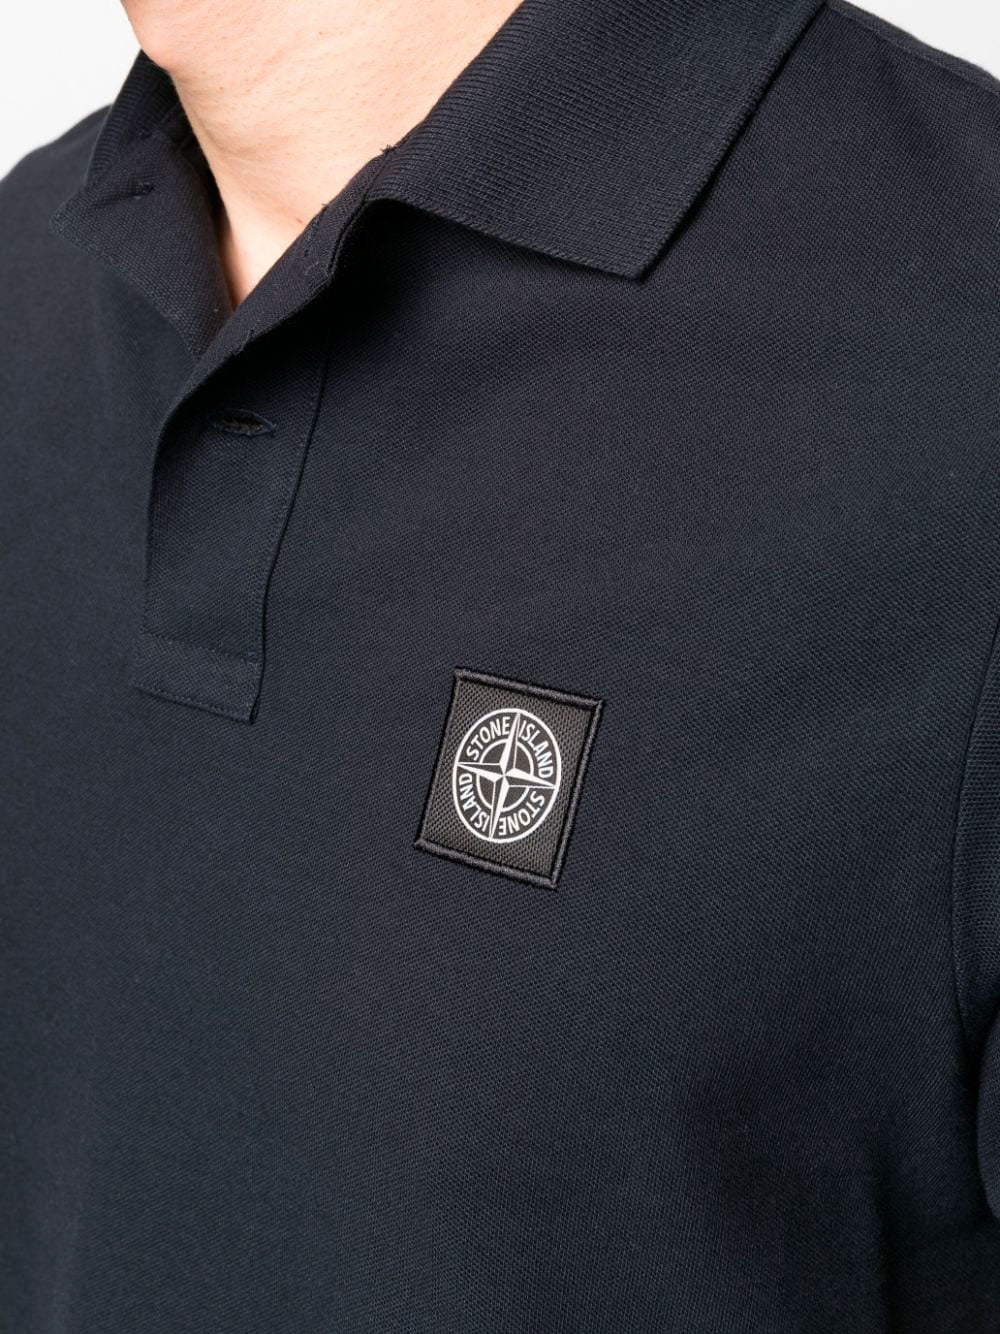 Compass-patch polo shirt